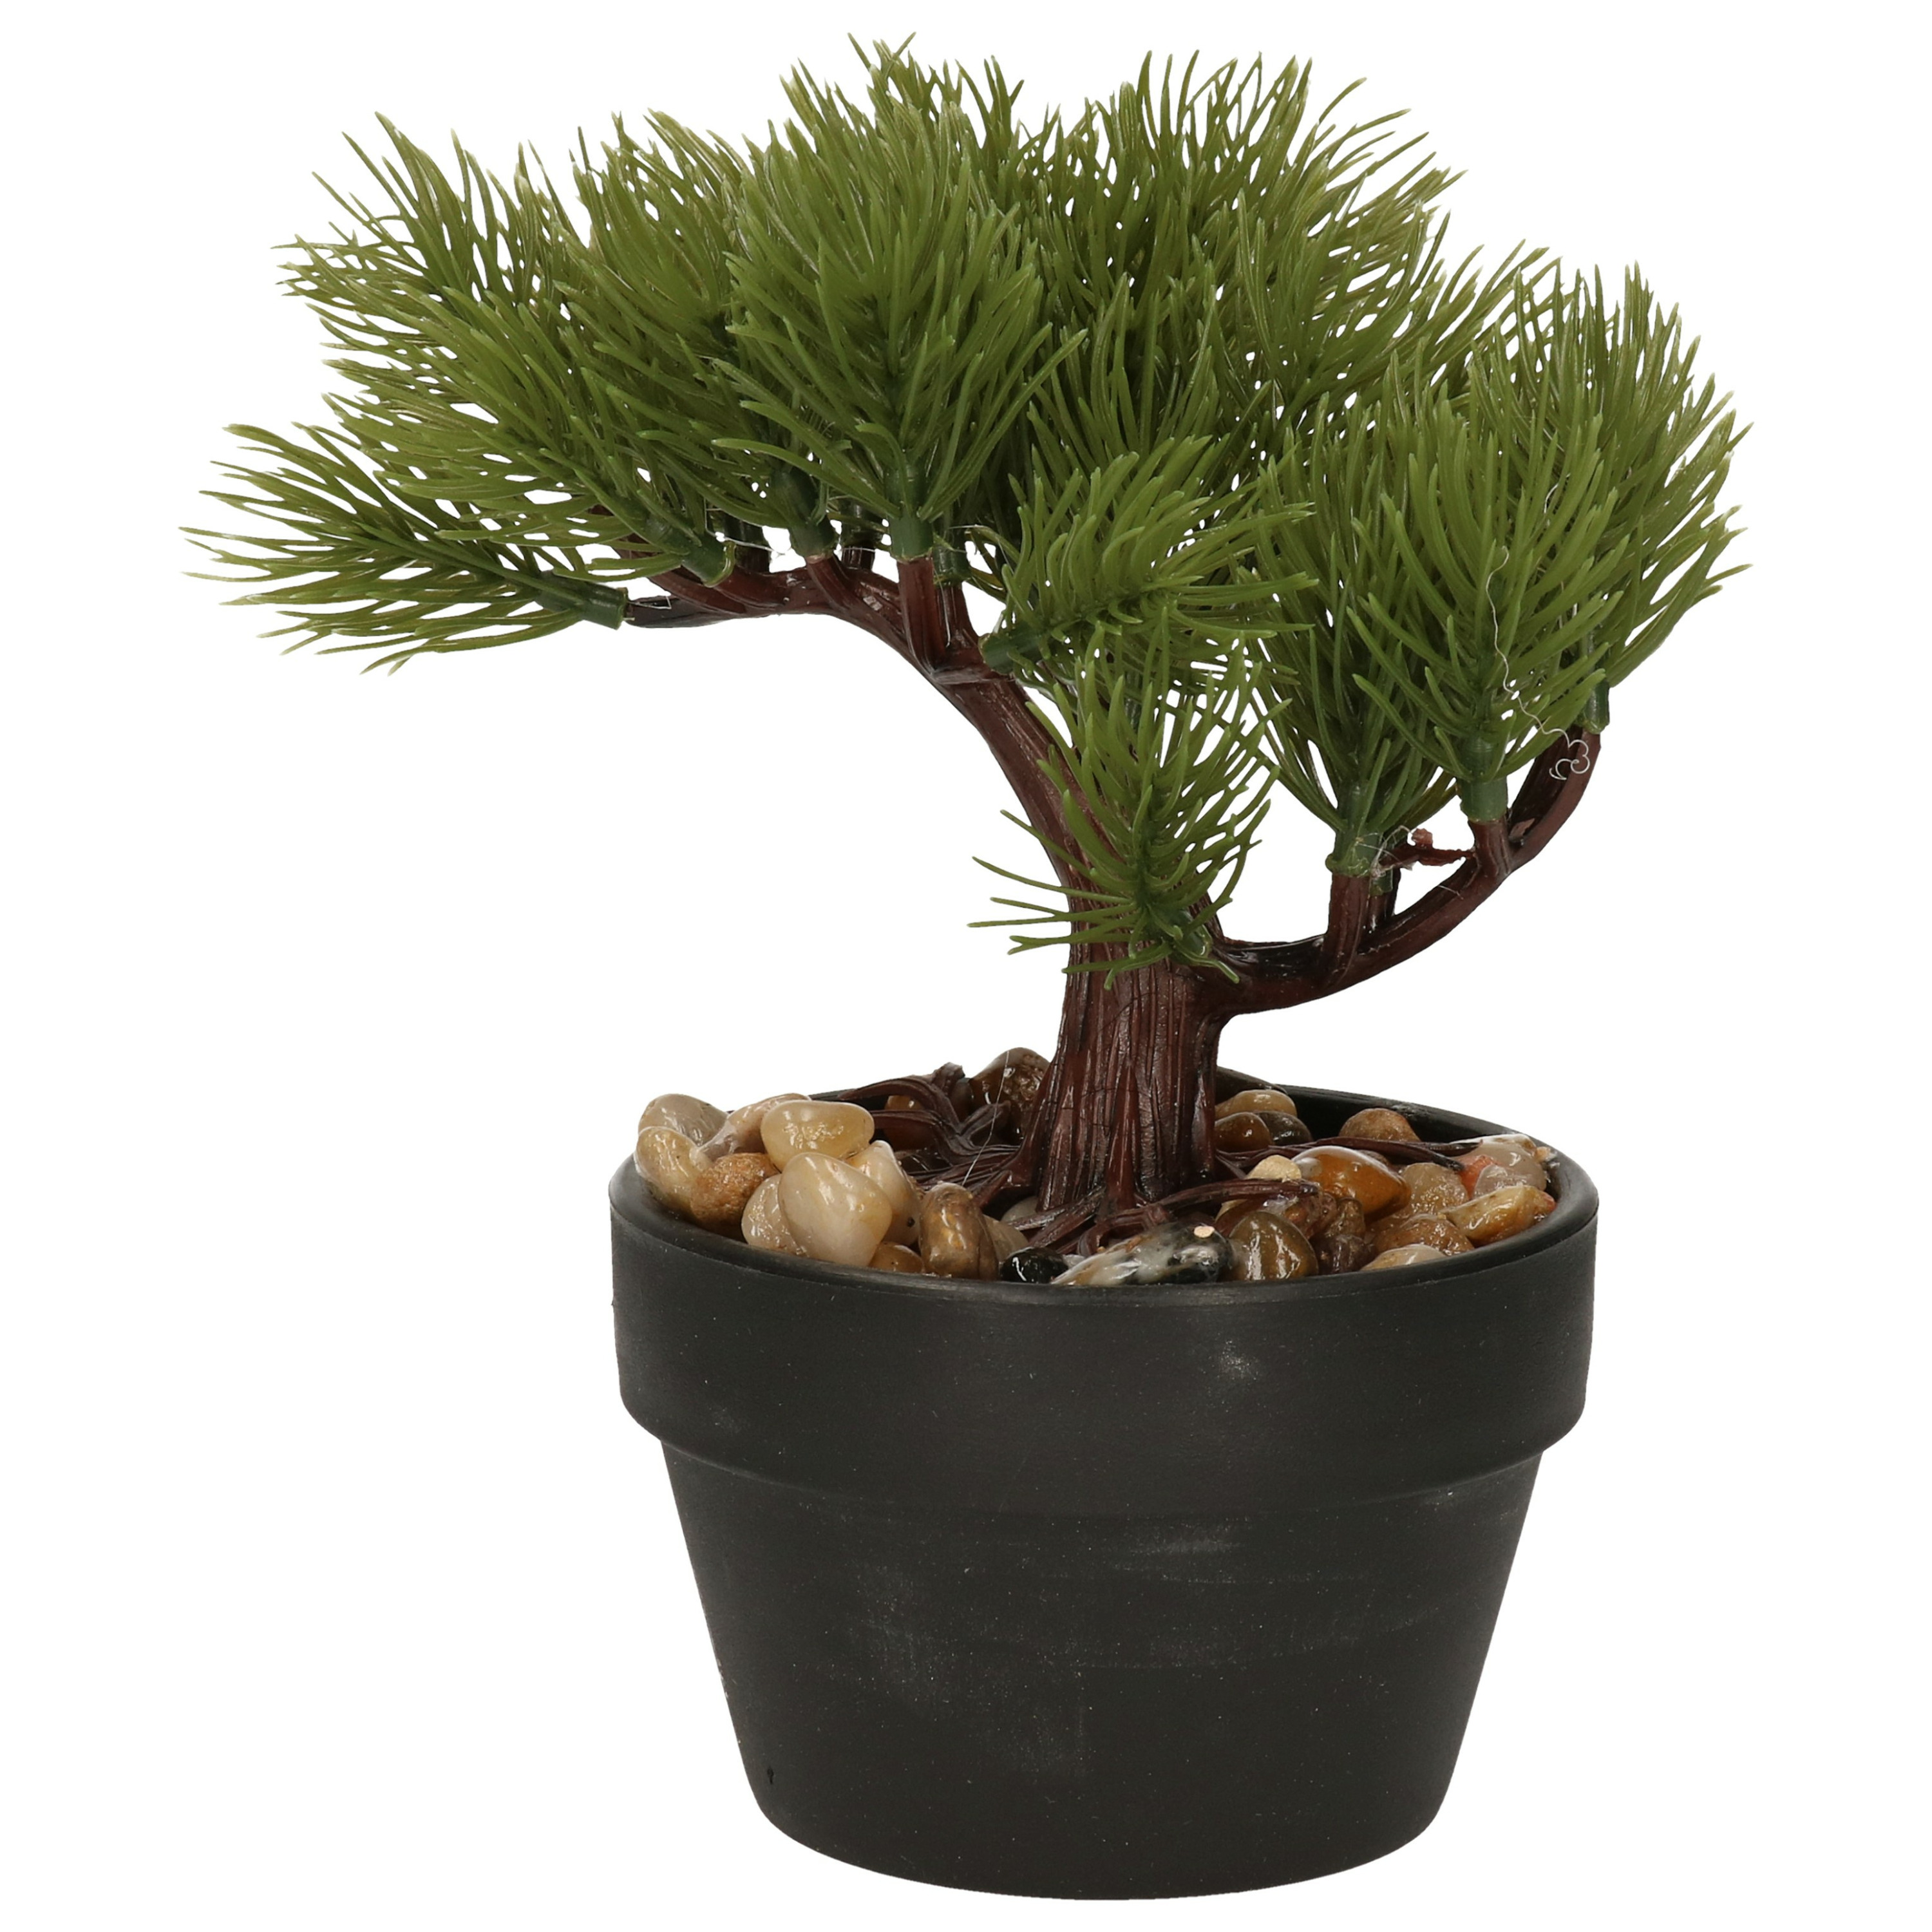 Kunstplant bonsai boompje in pot Japans decoratie 19 cm Type Needle